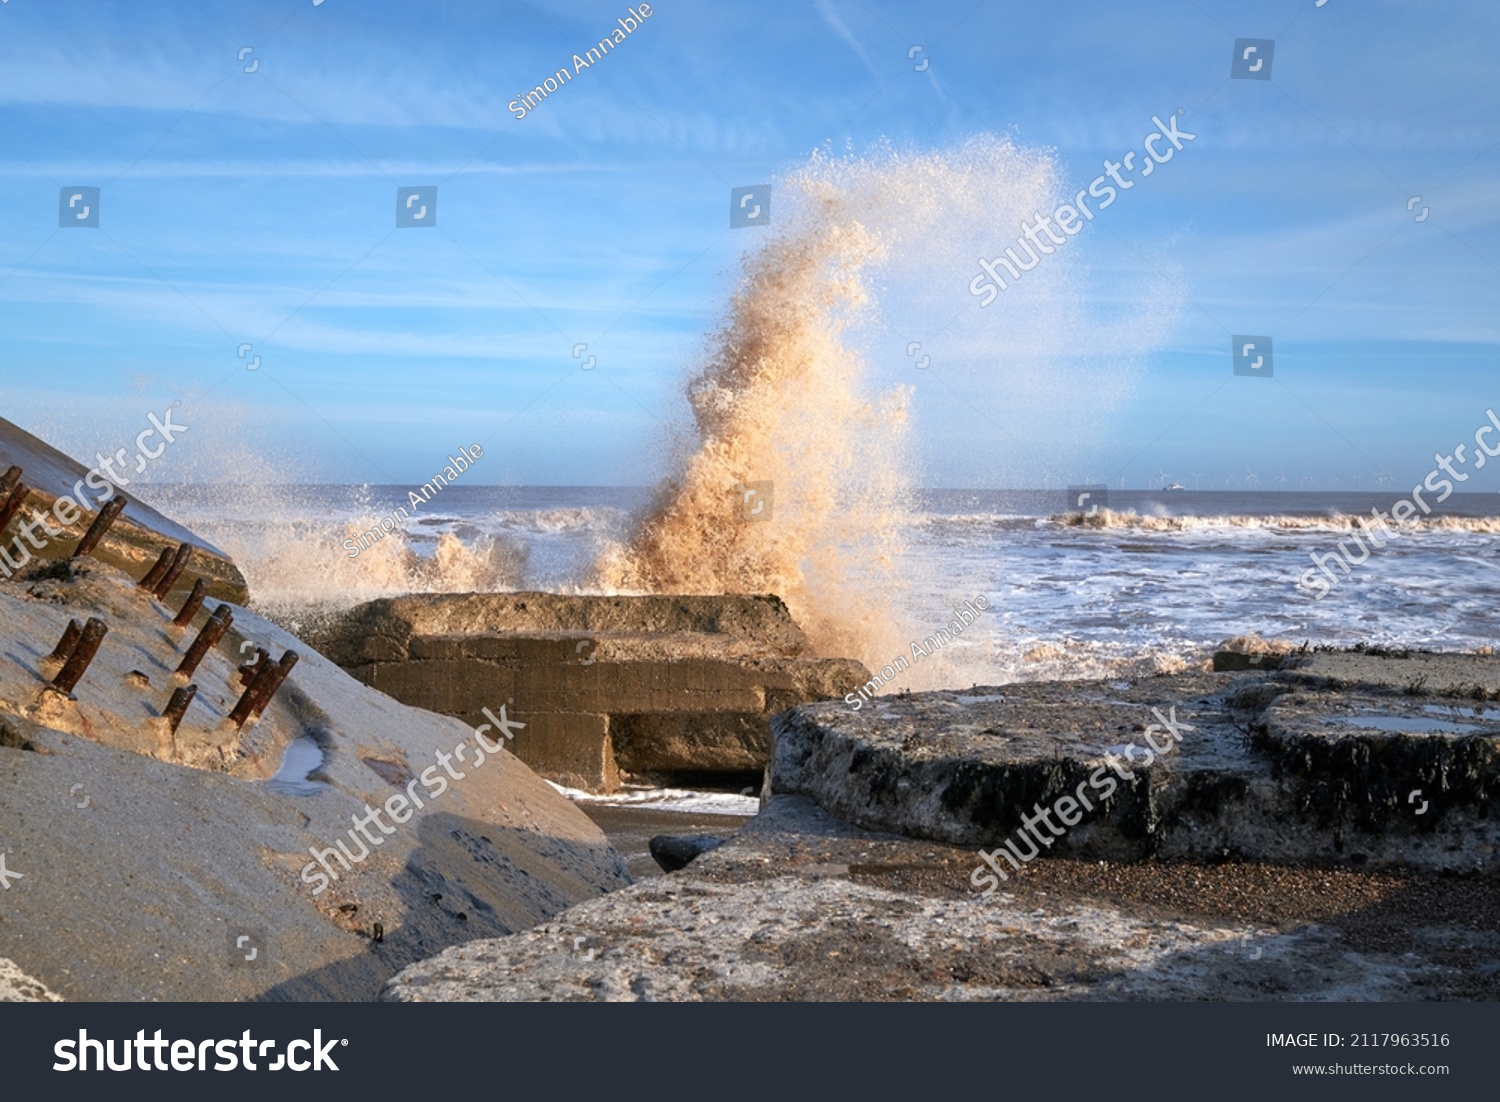 Waves crashing over rocks on a beach
 #2117963516